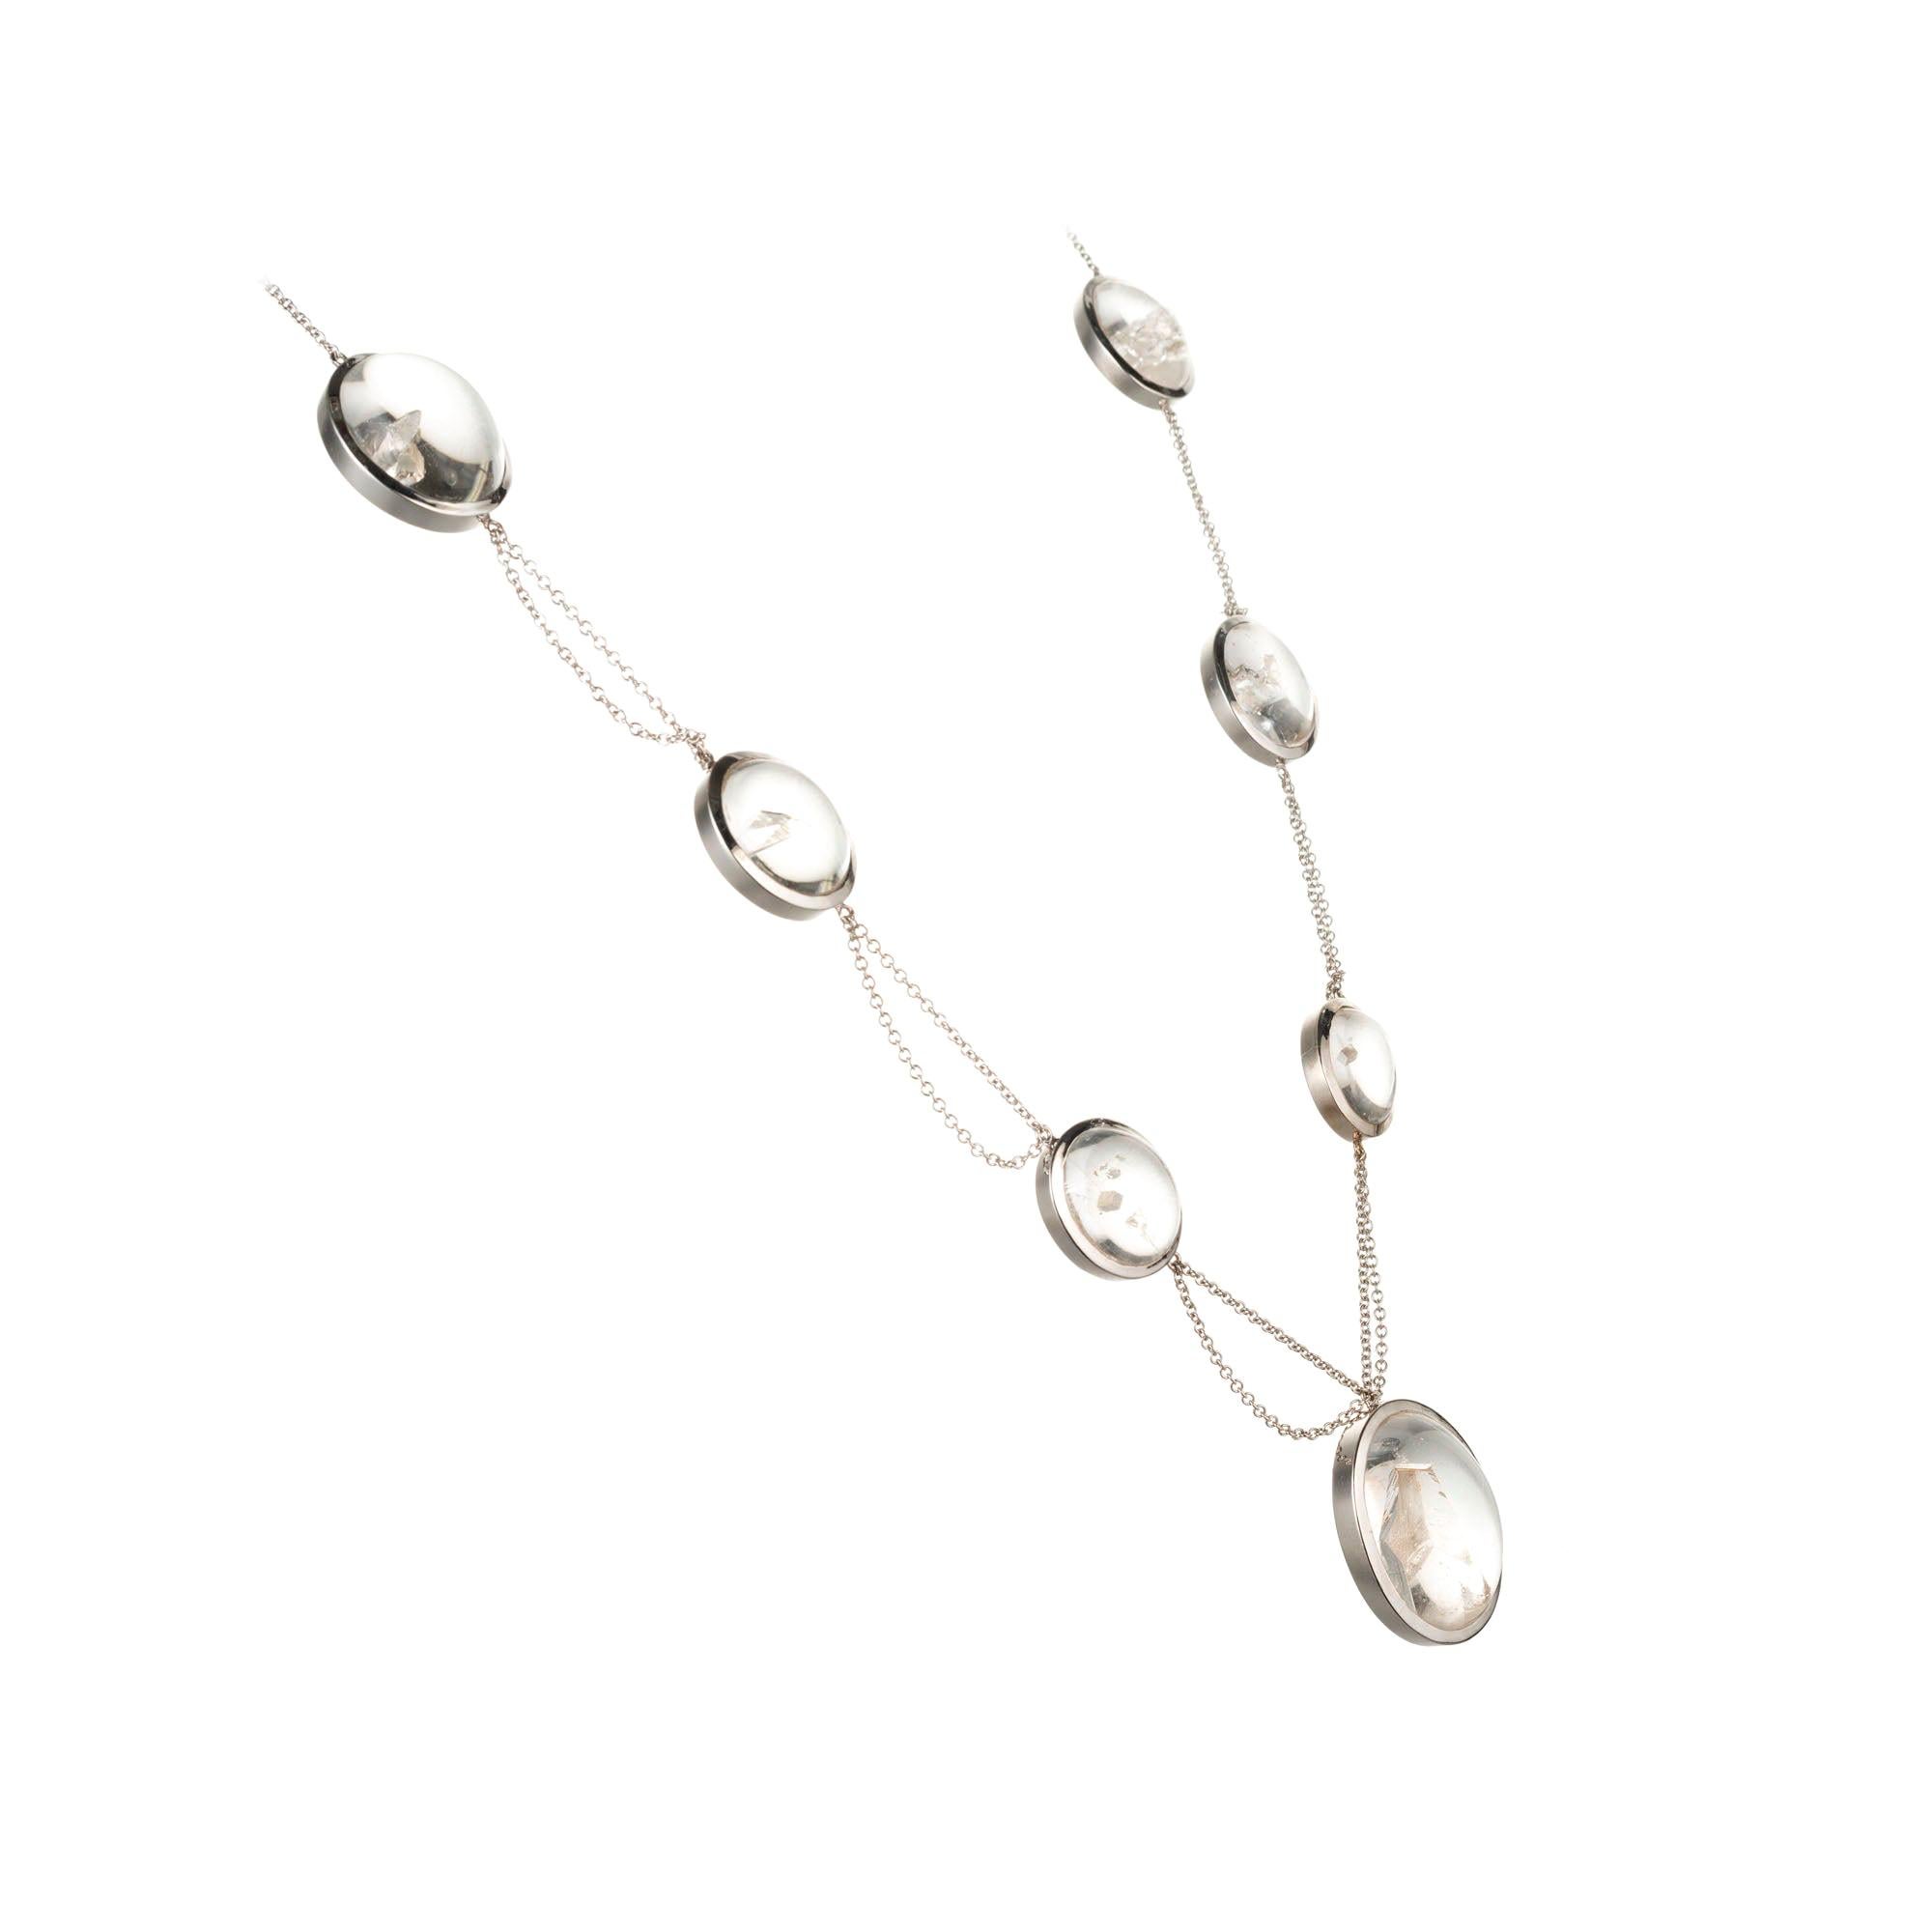 Peter Suchy 85.00 Carat Quartz Crystal Multi-Strand White Gold Pendant Necklace